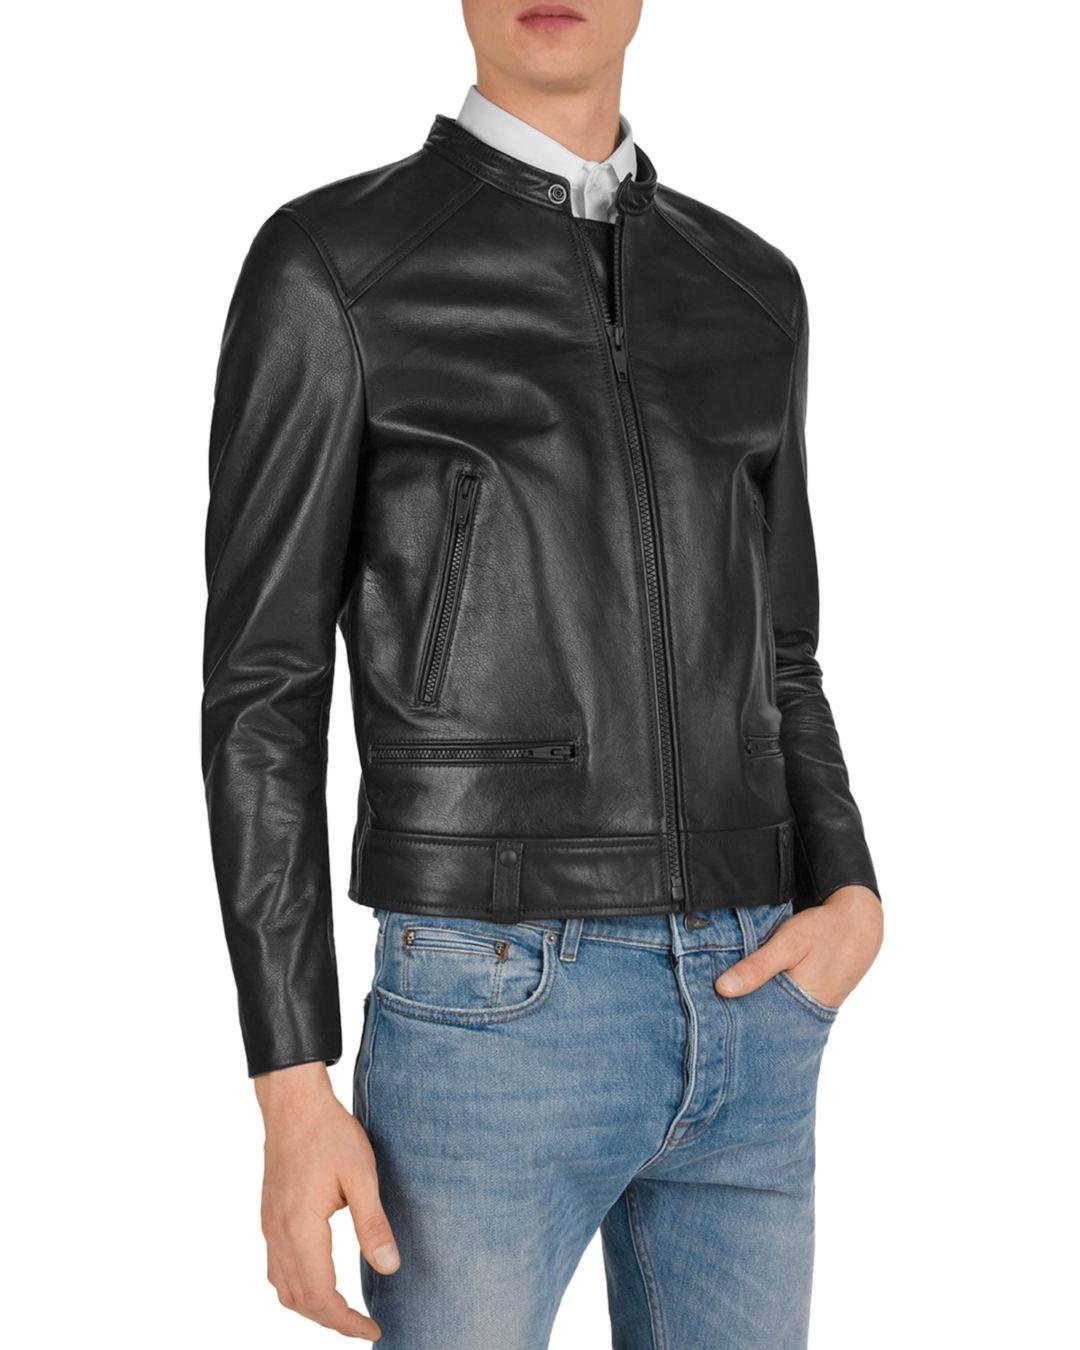 The Kooples Irish Leather Jacket in Black for Men - Lyst